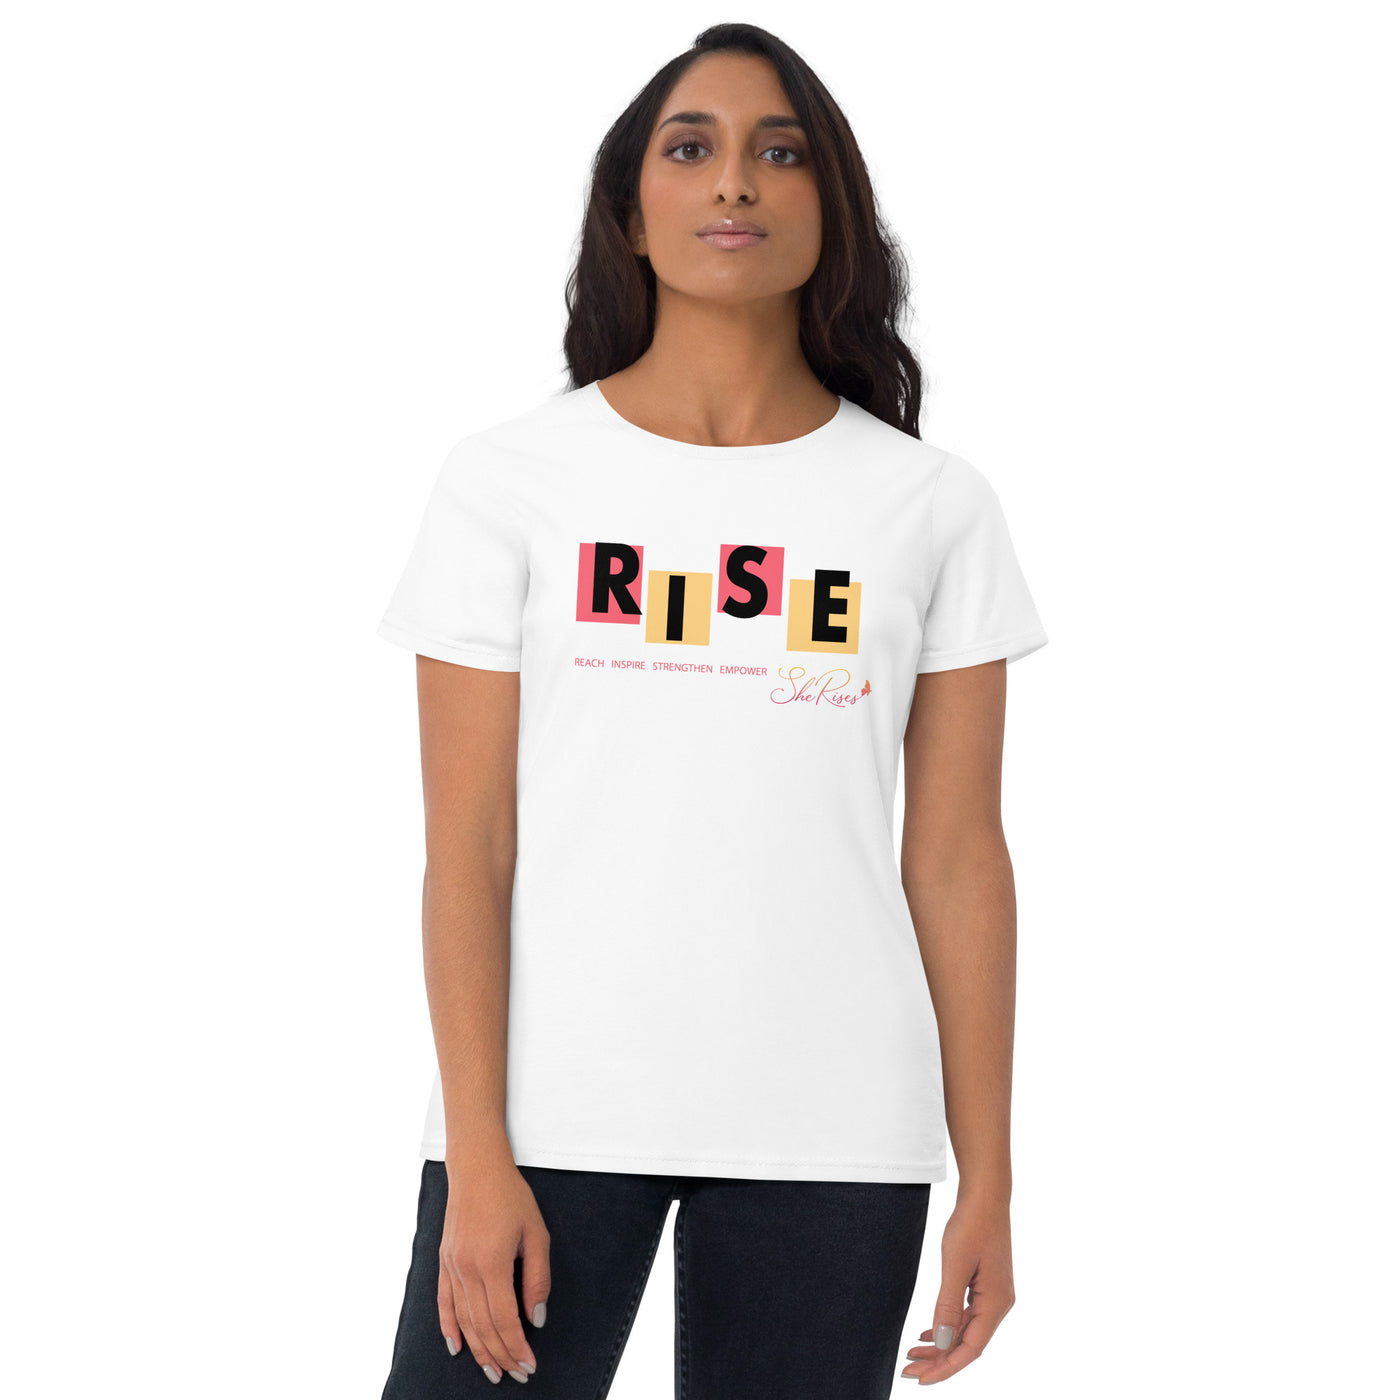 She Rises Women's short sleeve t-shirt